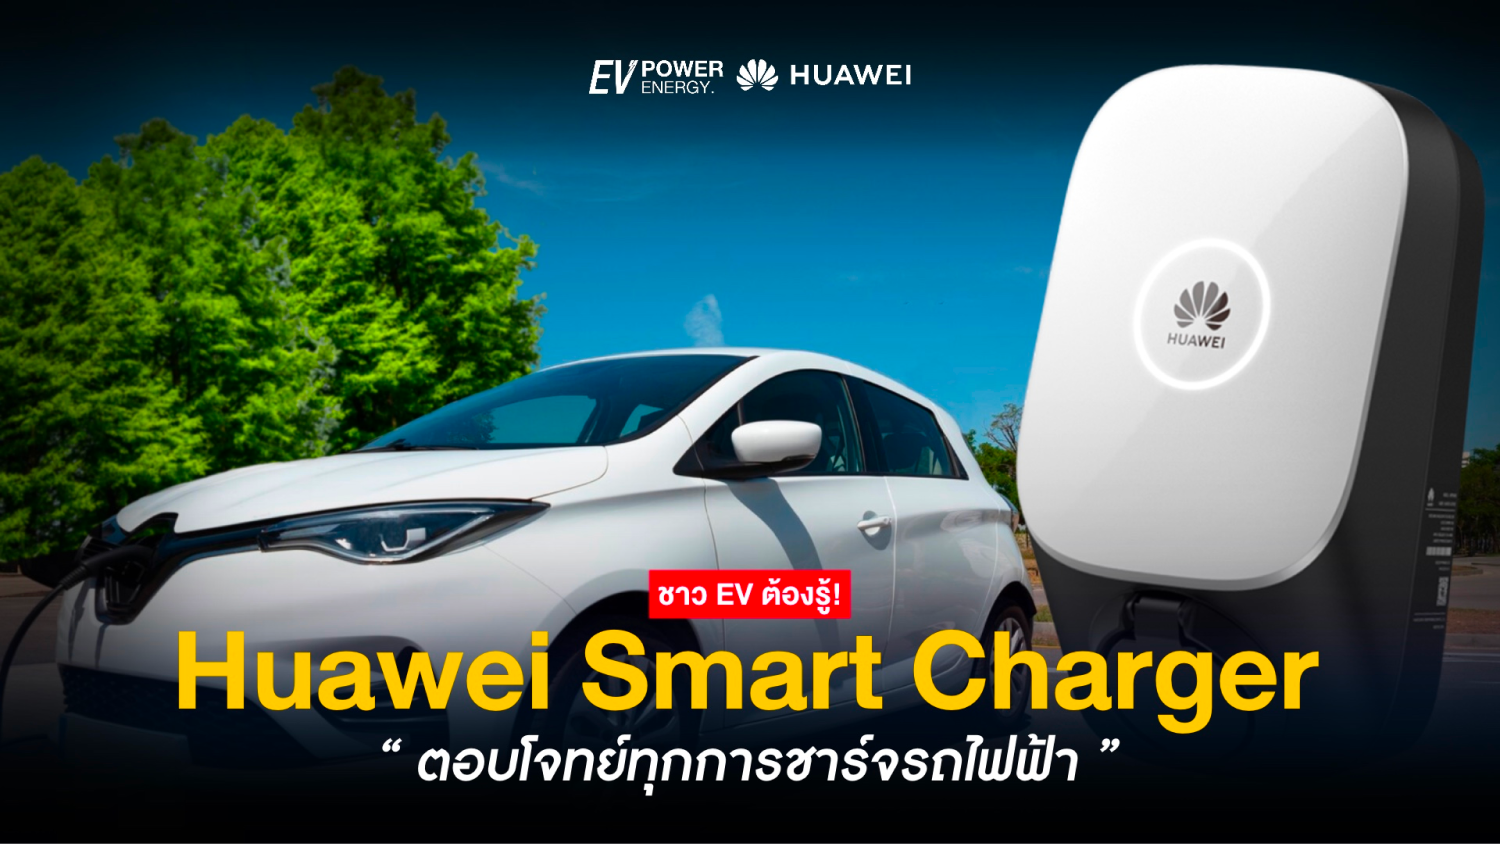 Huawei Smart Charger ตอบโจทย์ทุกการชาร์จ EV